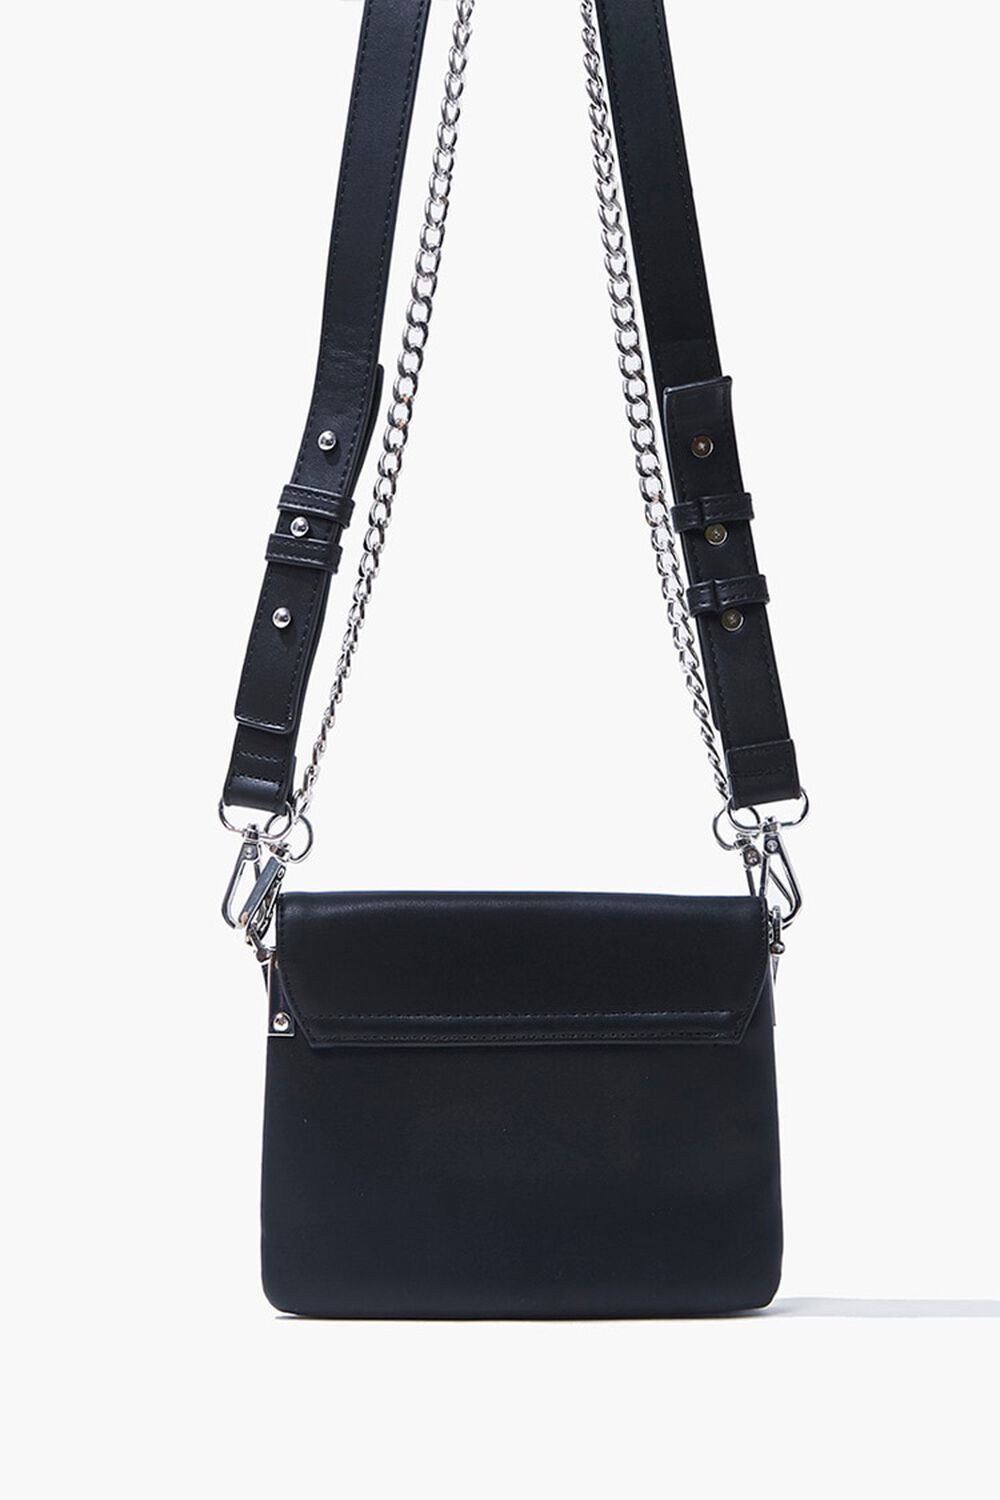 BLACK Curb Chain Crossbody Bag, image 3